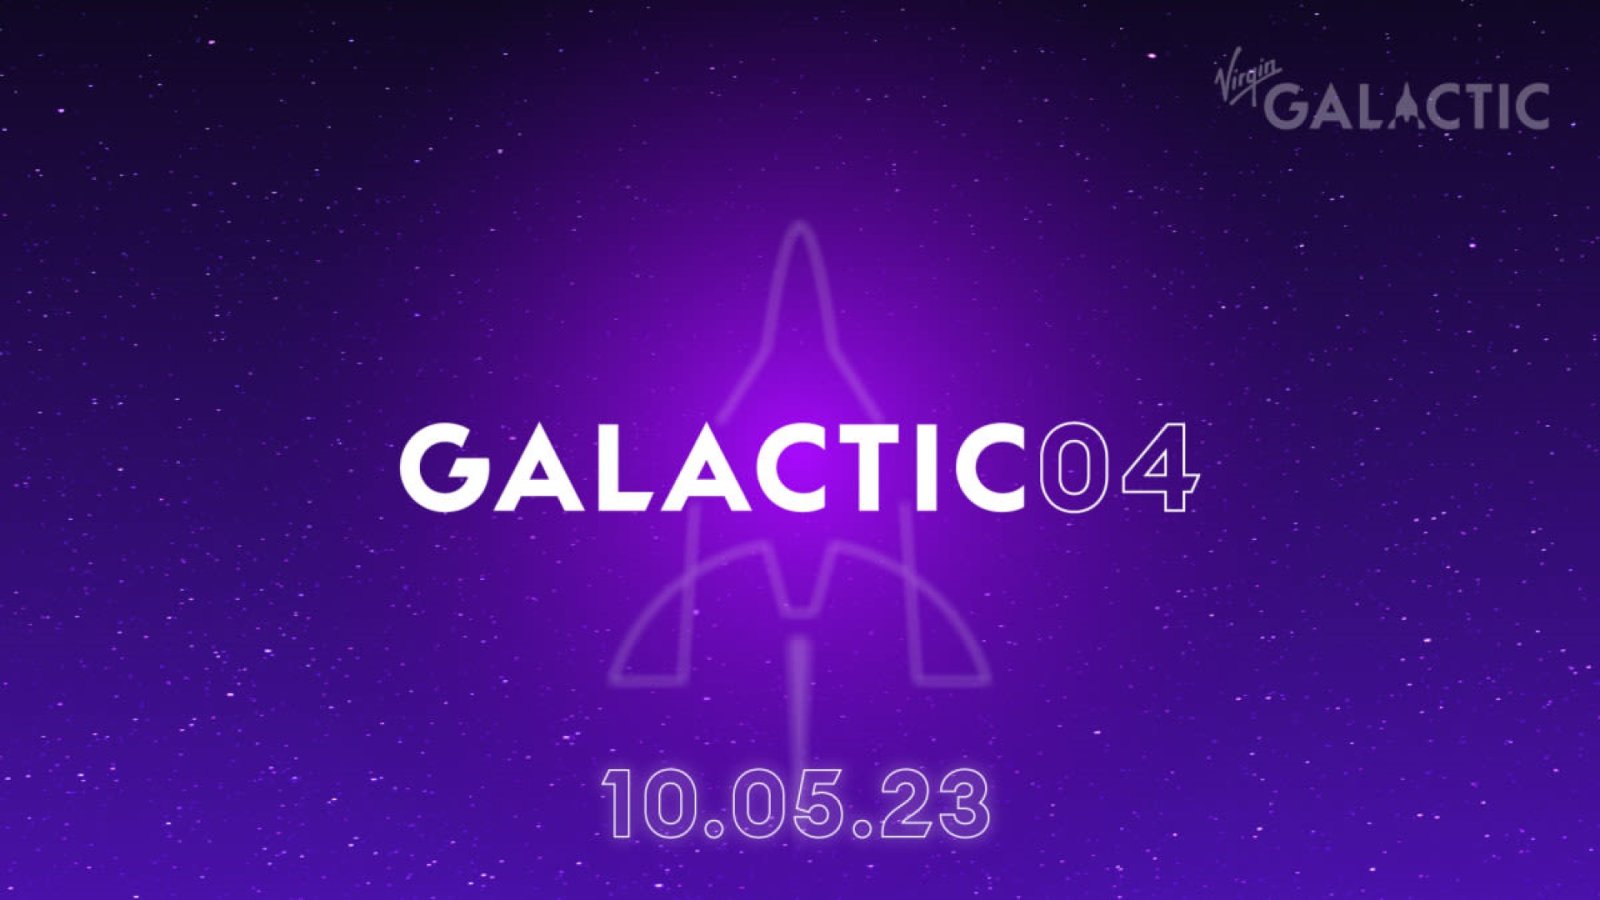 Virgin Galactic กำลังจะปล่อยภารกิจ Galactic 04 เที่ยวบินท่องขอบอวกาศใน 5 ต.ค.